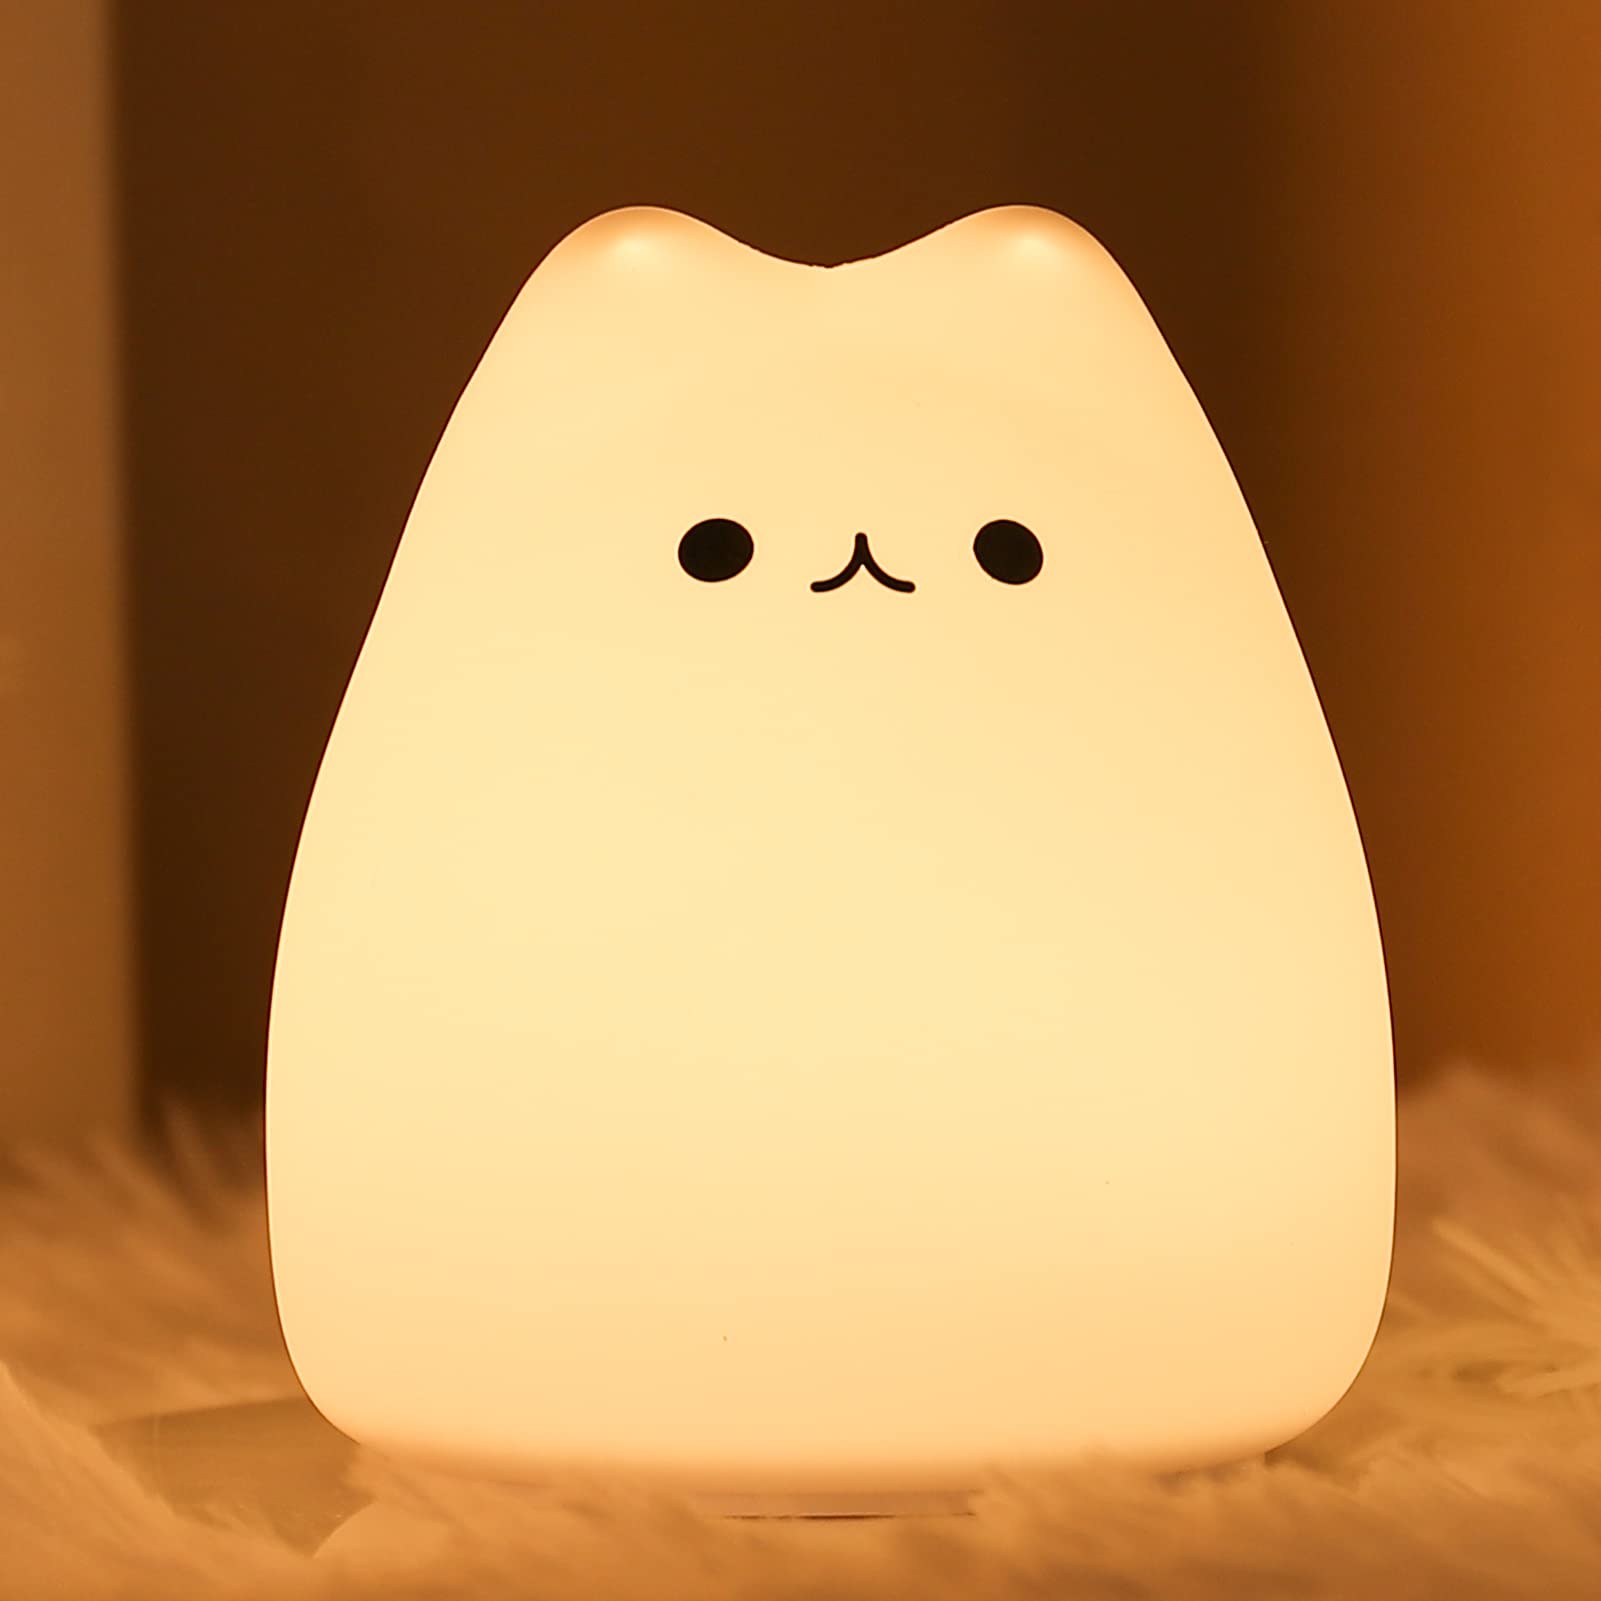 Tremdwoto Cat Night Light for Kids, Battery Powered Silicone Cute Cat Nursery Night Lights, Portable Night Light